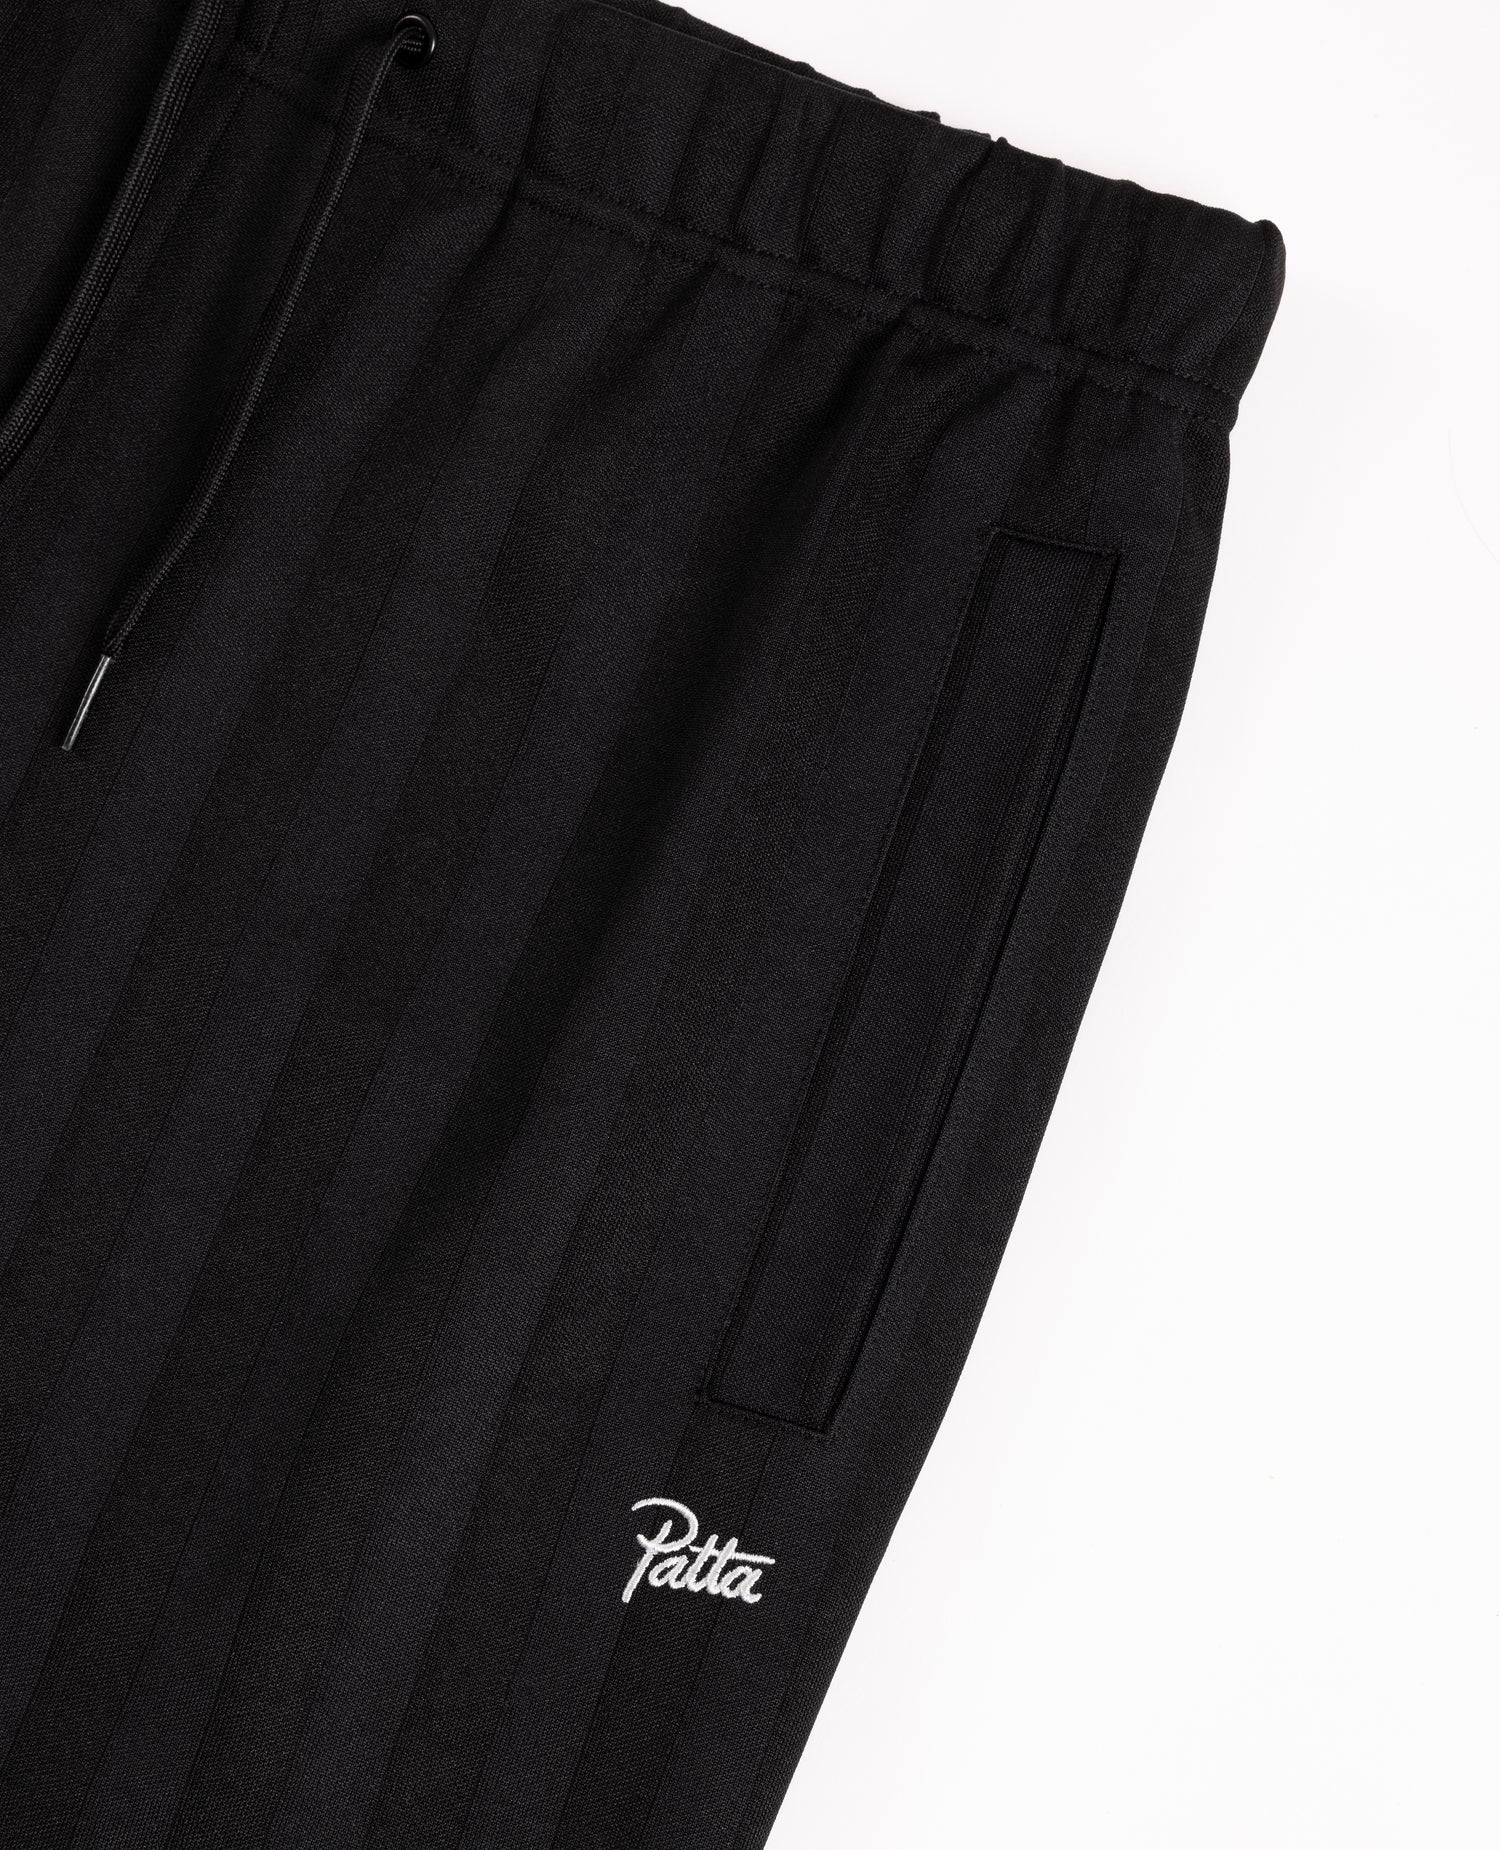 Patta Tricot Track Pants (Black)